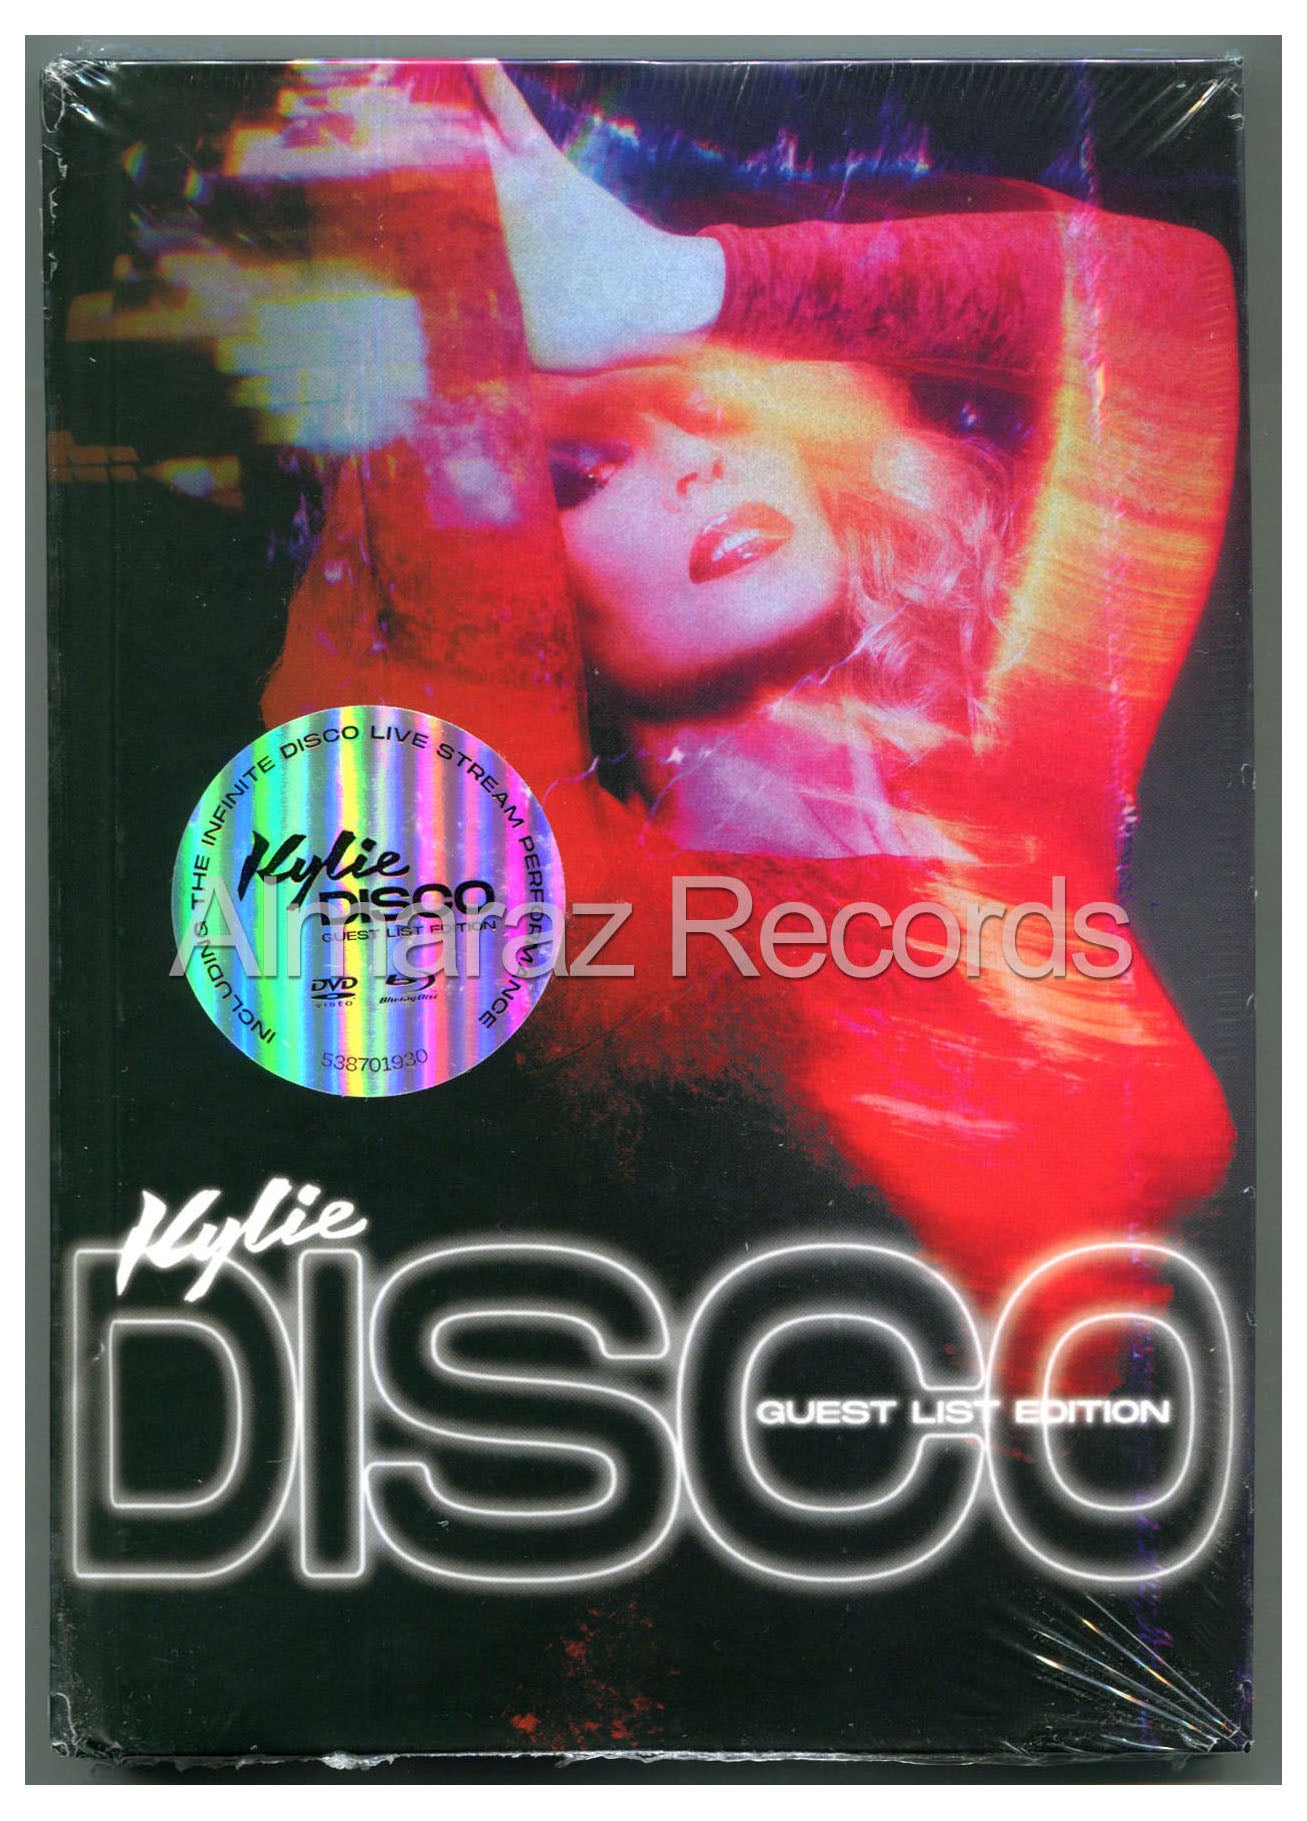 Kylie Minogue Disco Guest List Edition 3CD+DVD+Blu-Ray